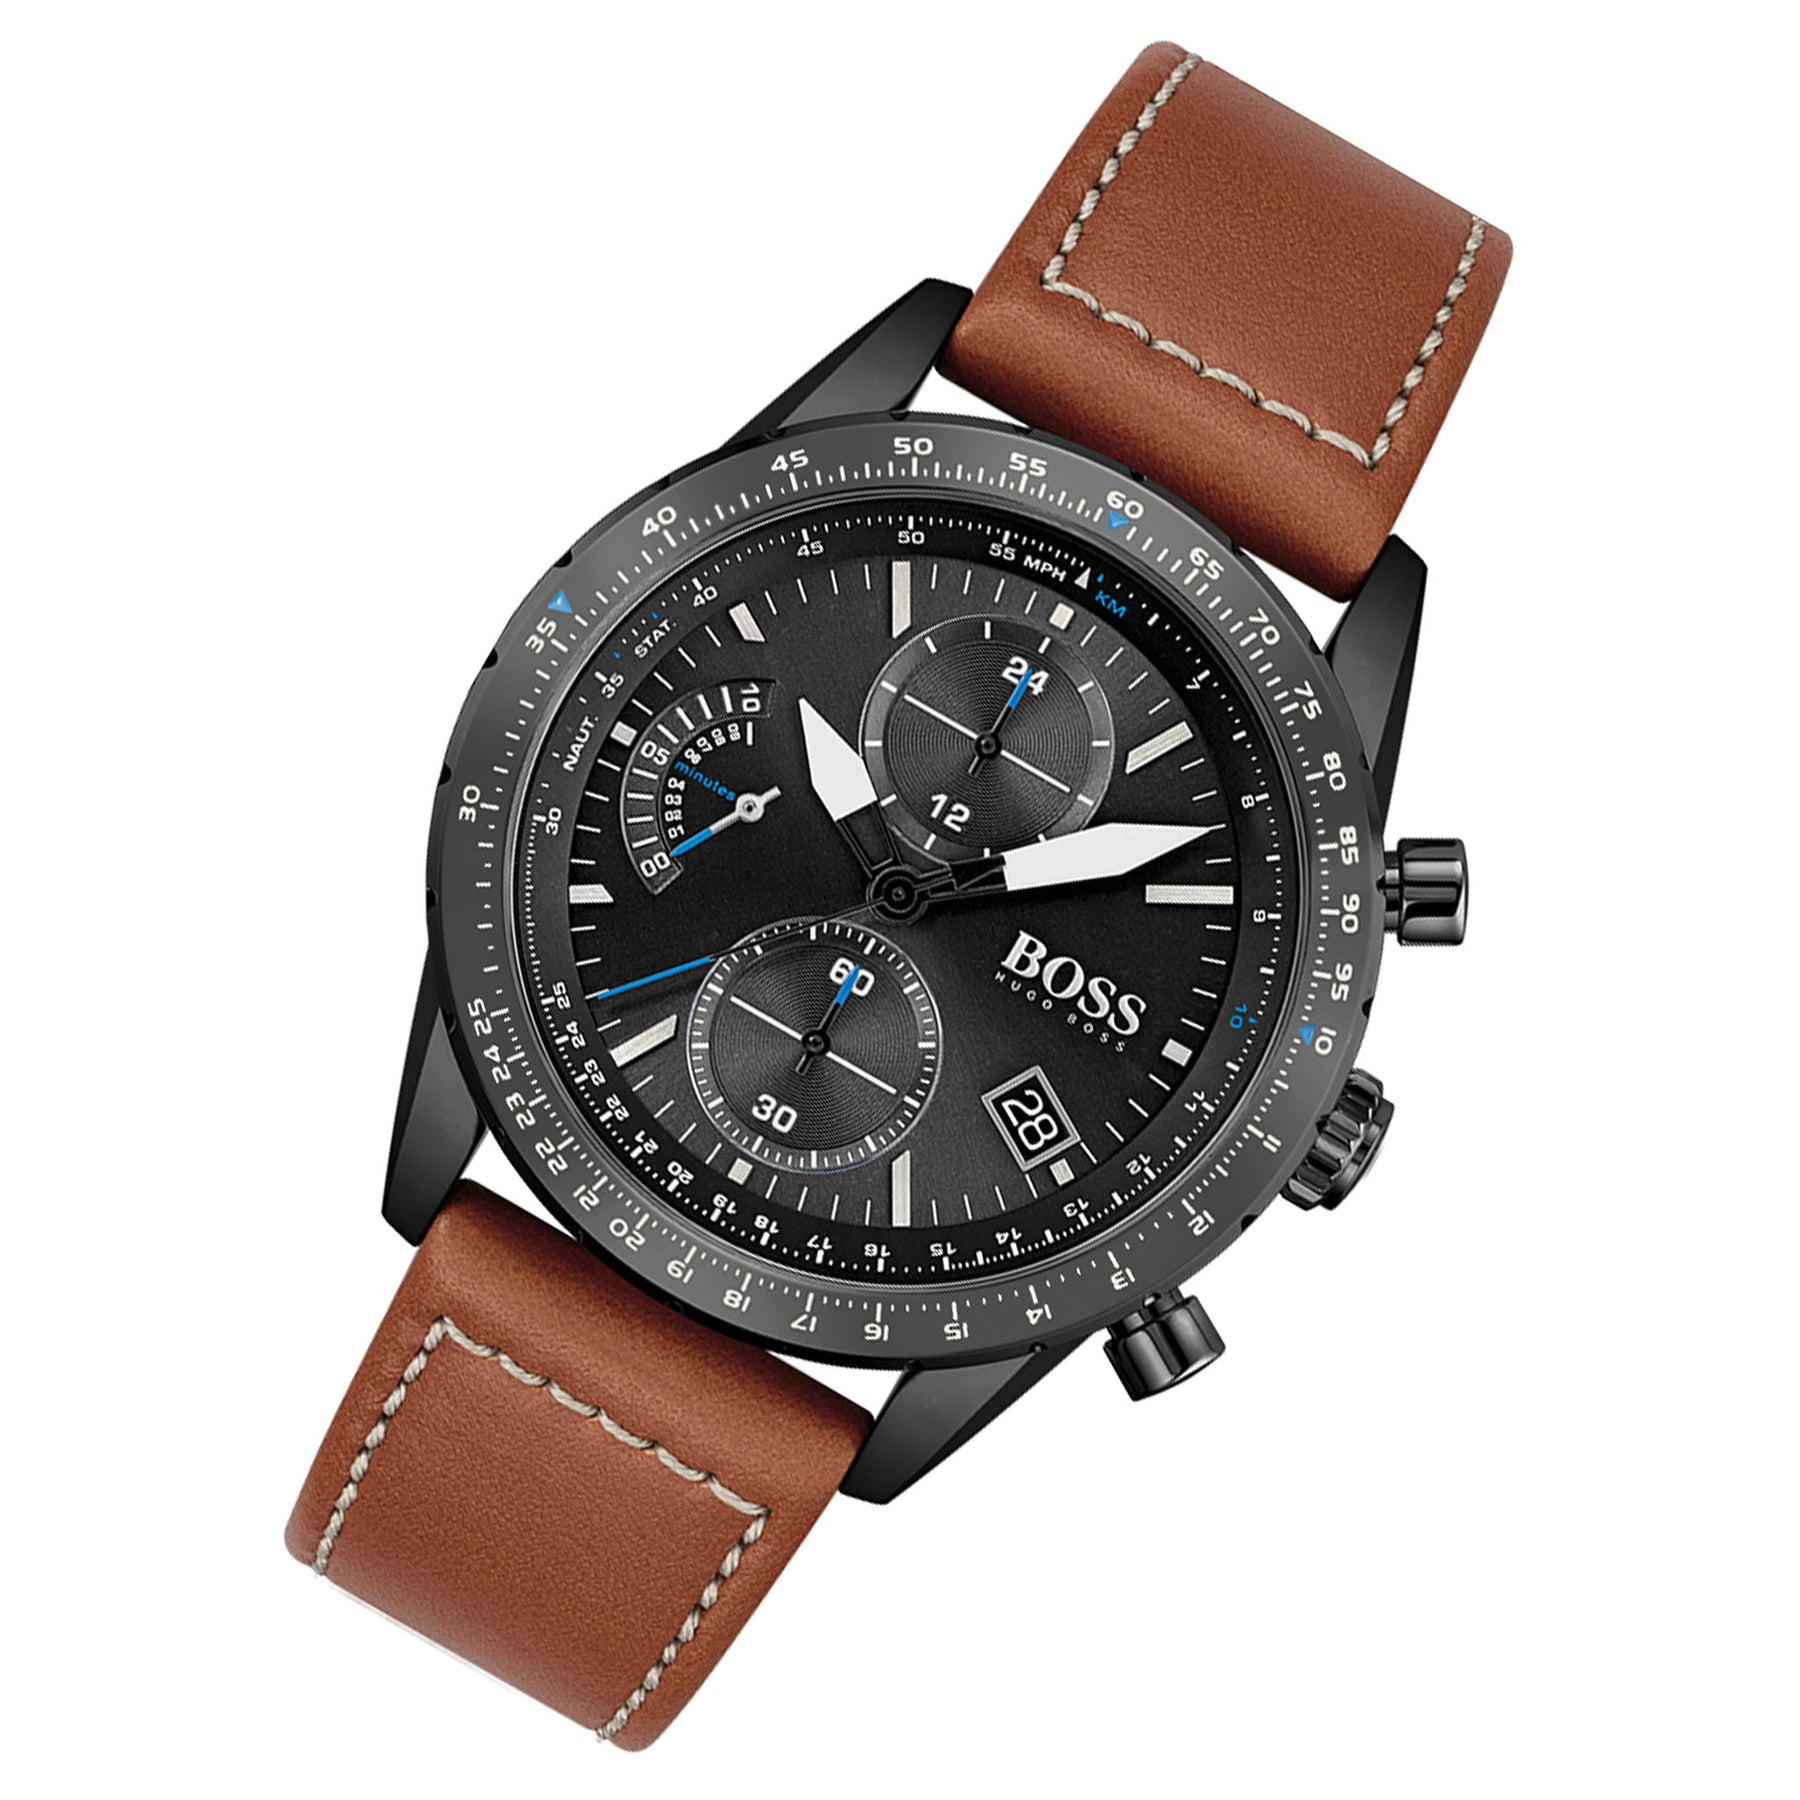 Hugo Boss Pilot – Leather Chrono Edition The Men\'s Factory Brown - Watch 1513851 Australia Watch